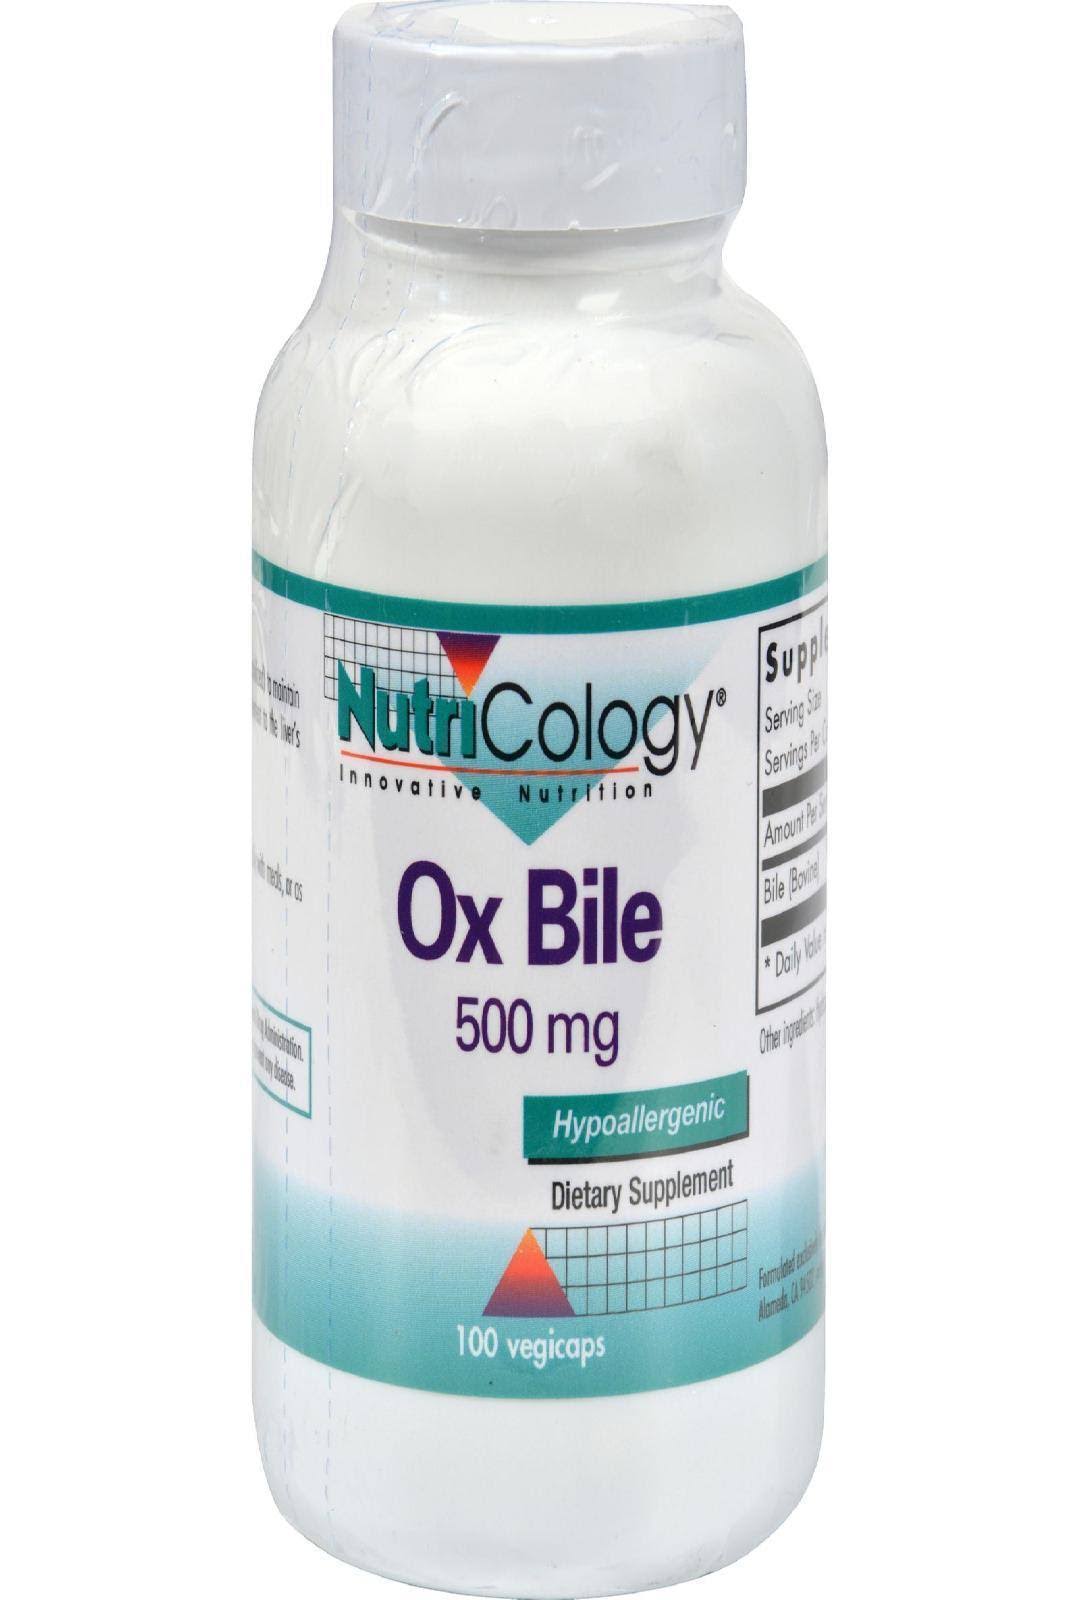 Nutricology Ox Bile 500 mg 100